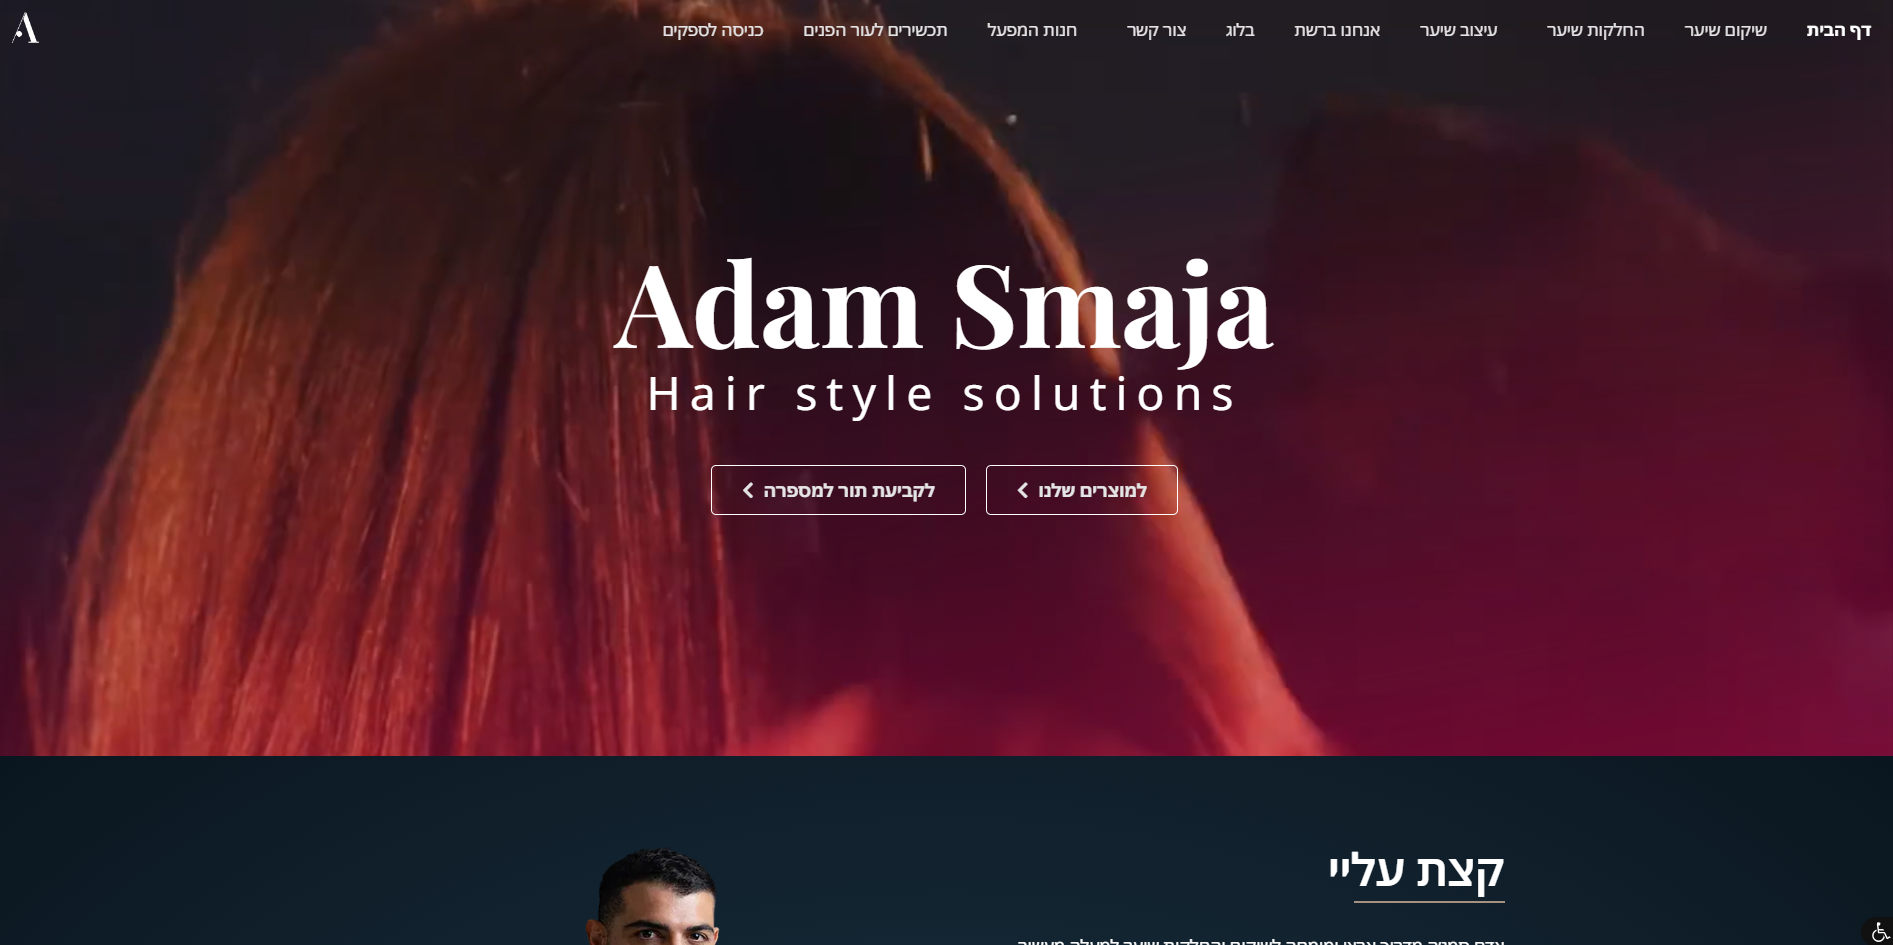 ADAMSMAJA Hair Style Solutions